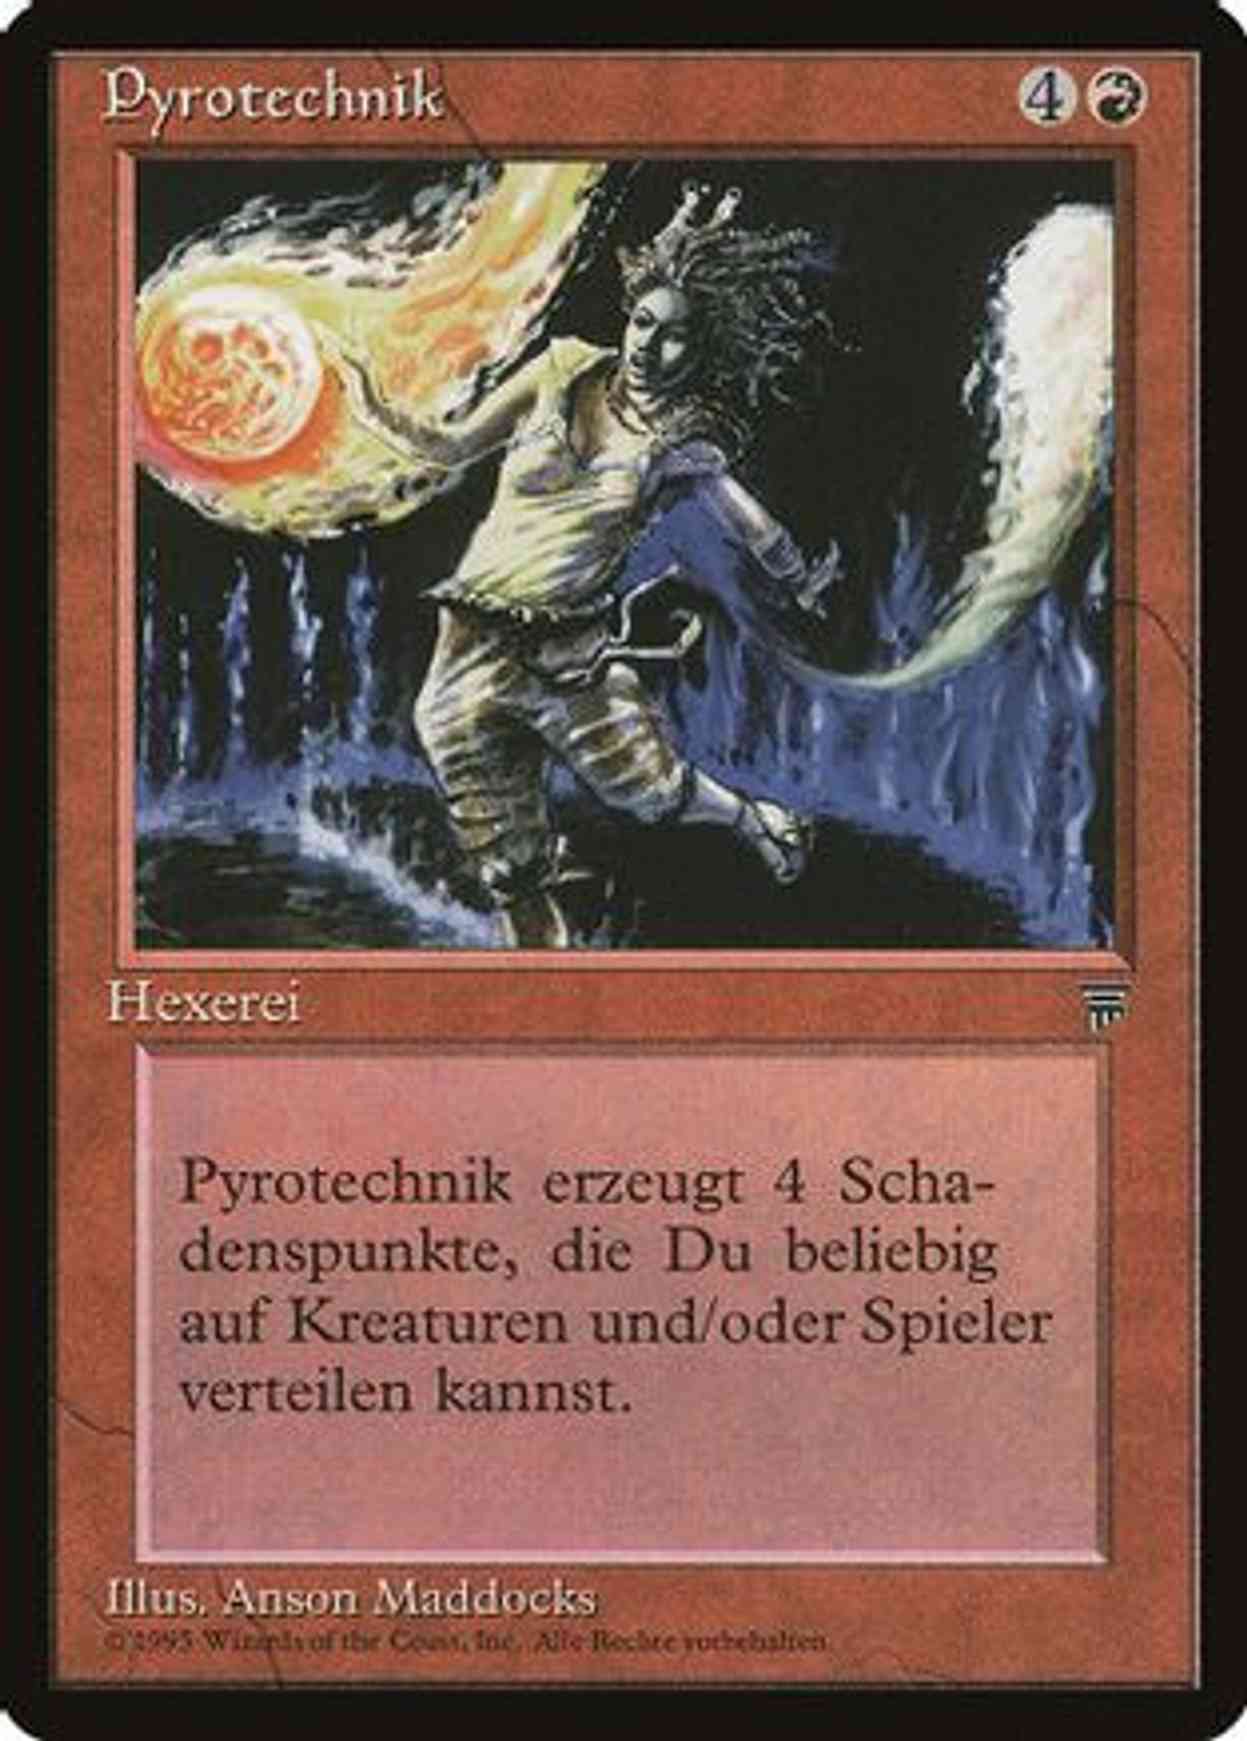 Pyrotechnics (German) - "Pyrotechnik" magic card front